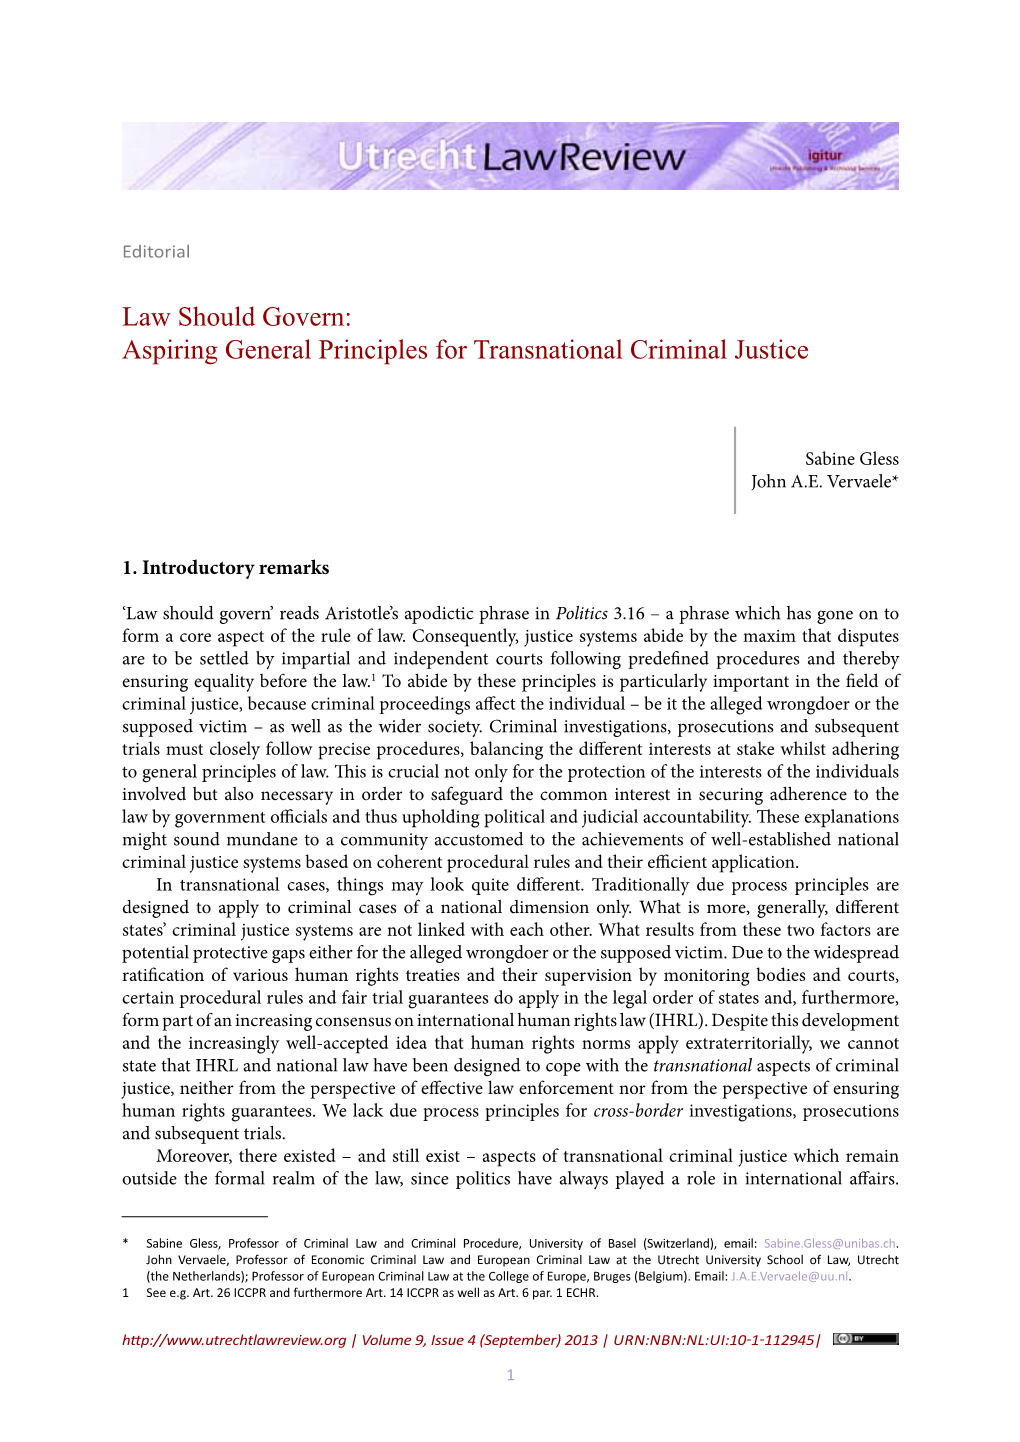 Aspiring General Principles for Transnational Criminal Justice